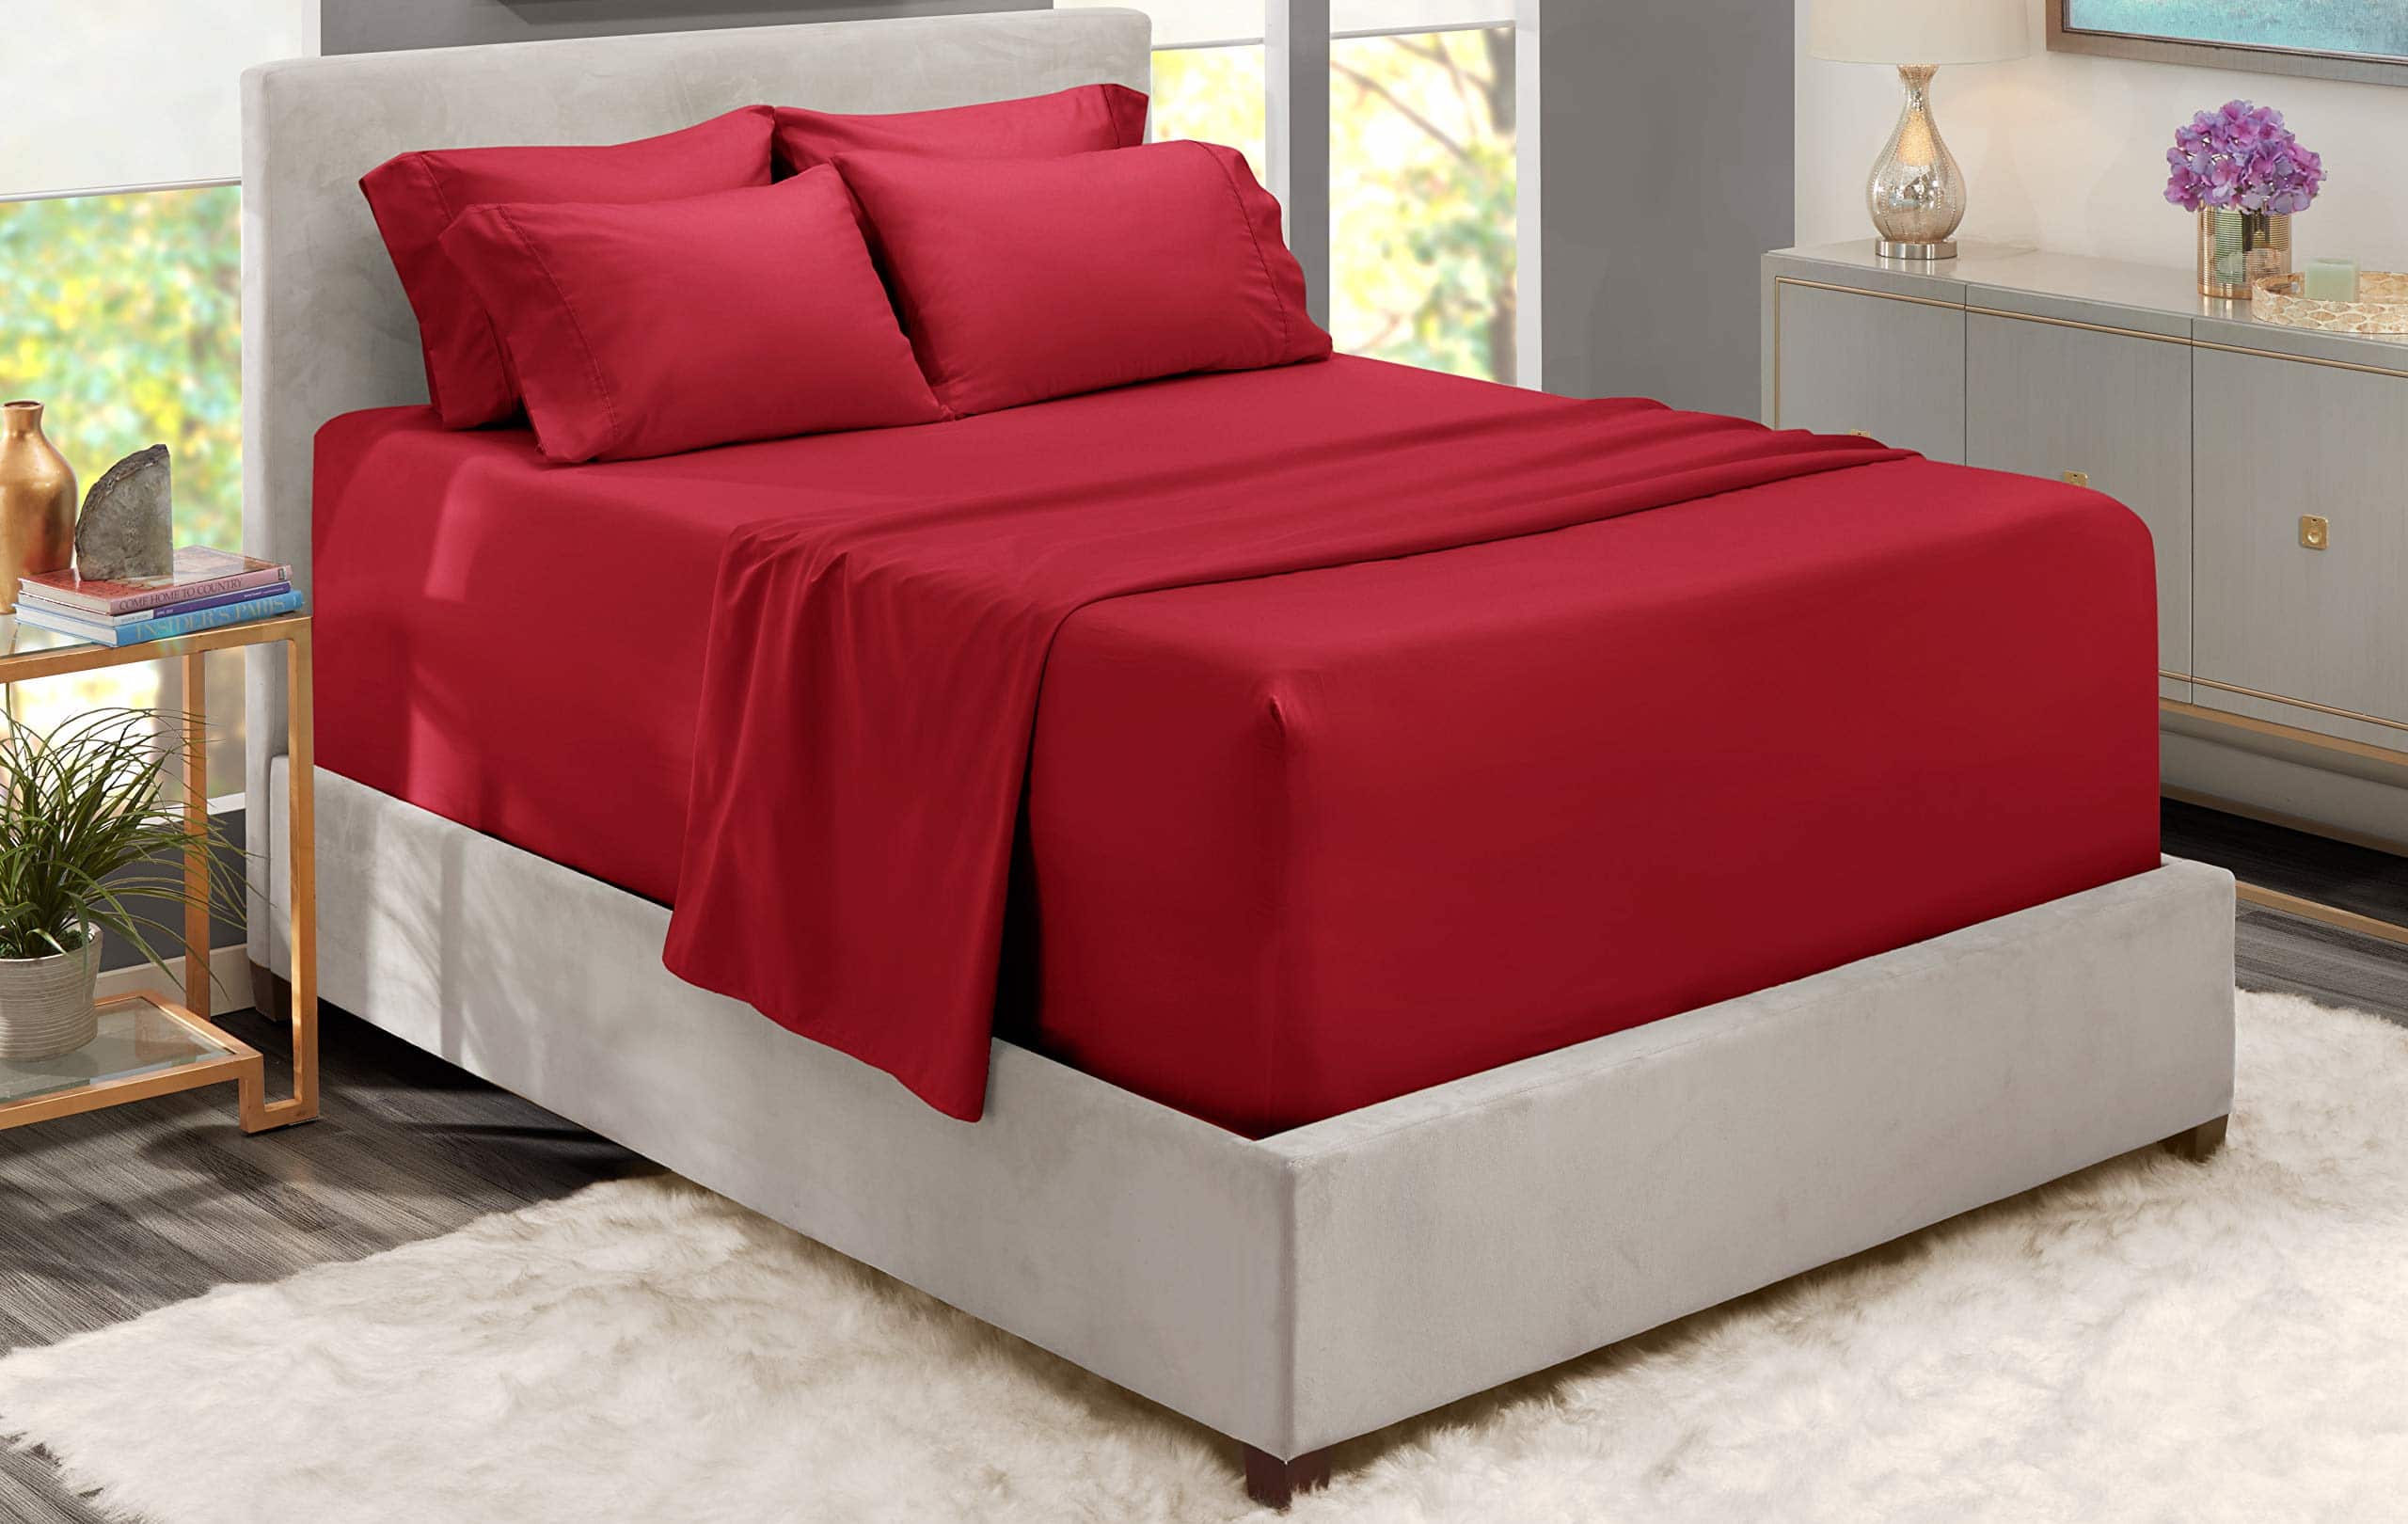 extra deep pocket sheets for air mattress